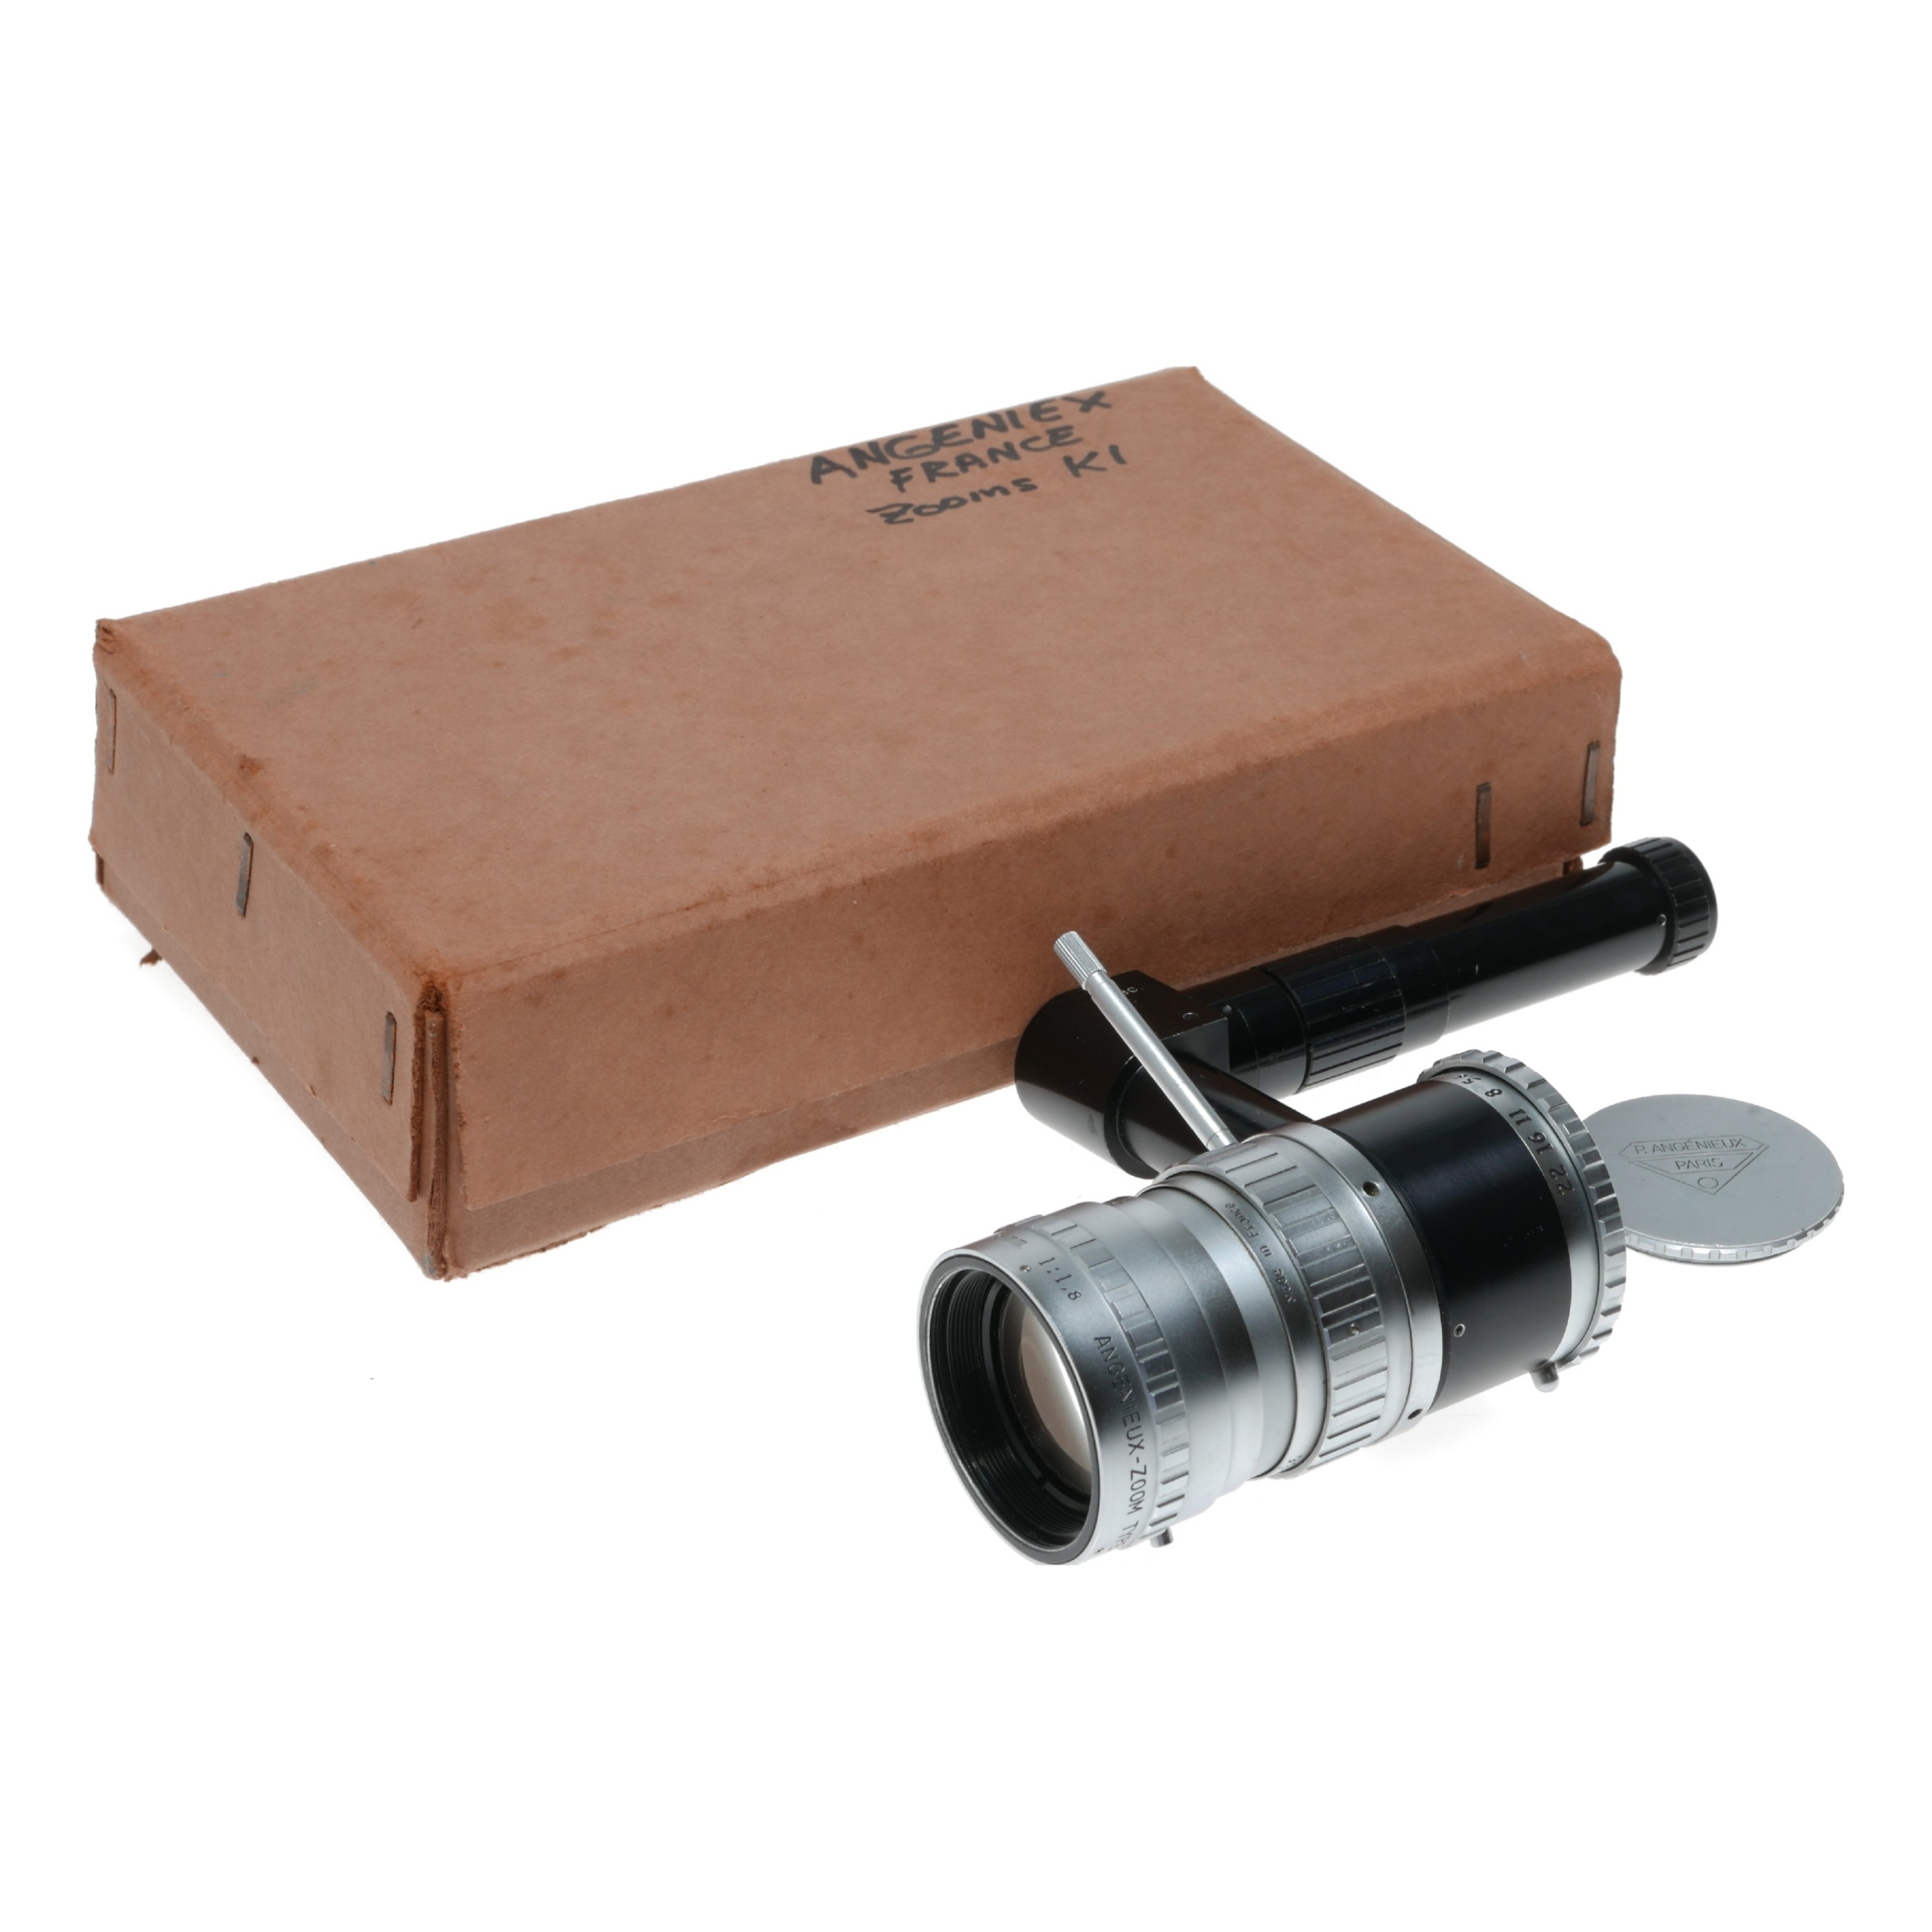 Angenieux-Zoom Type K1 Lens 1:1.8 fu003d9-36mm ERCSAM Camex 8 Camera